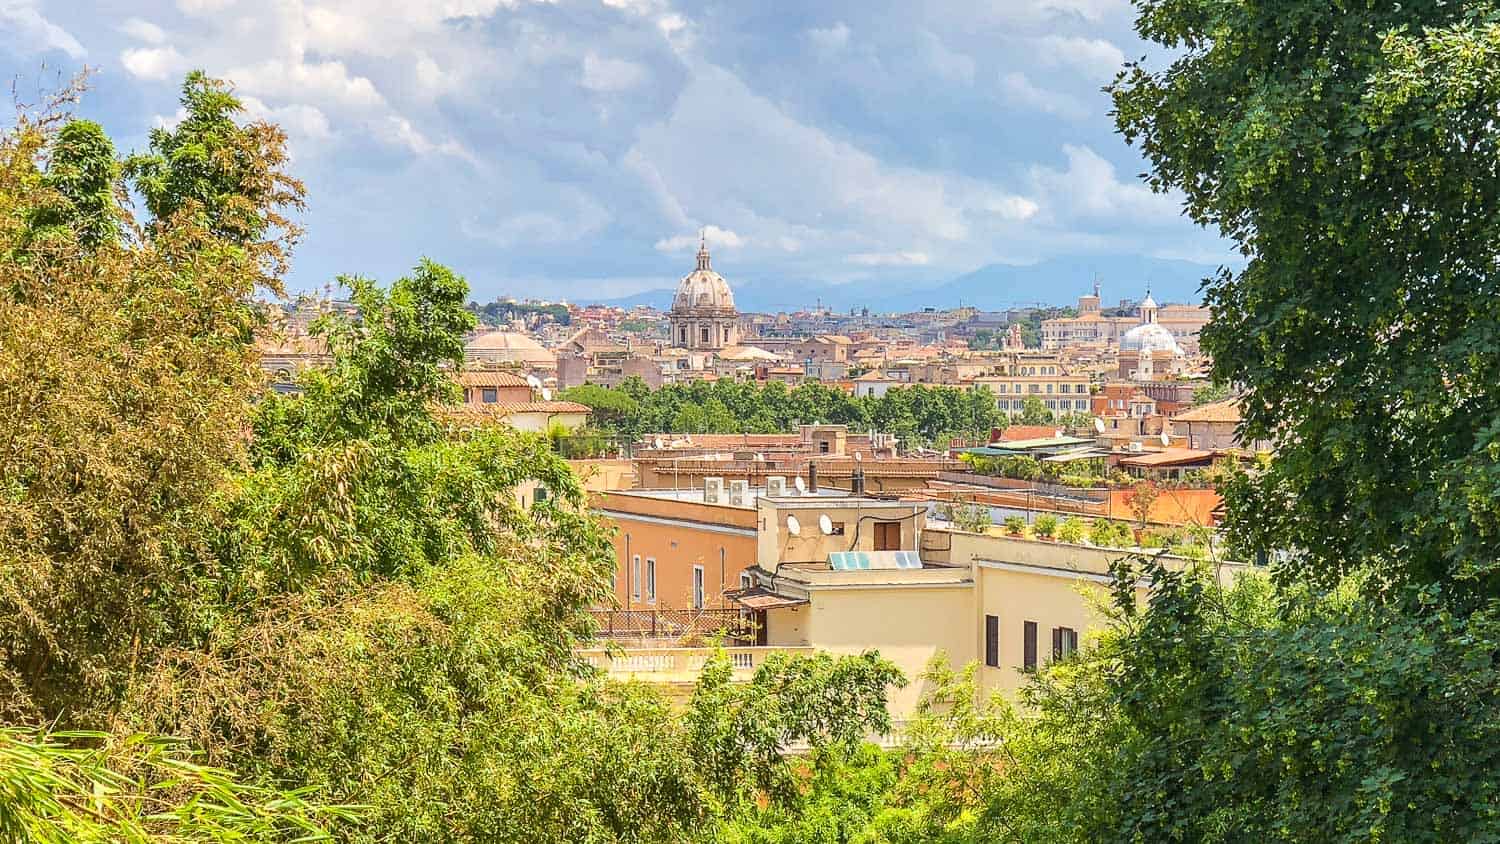 Rome view from the Orto Botanico botanical gardens in Trastevere